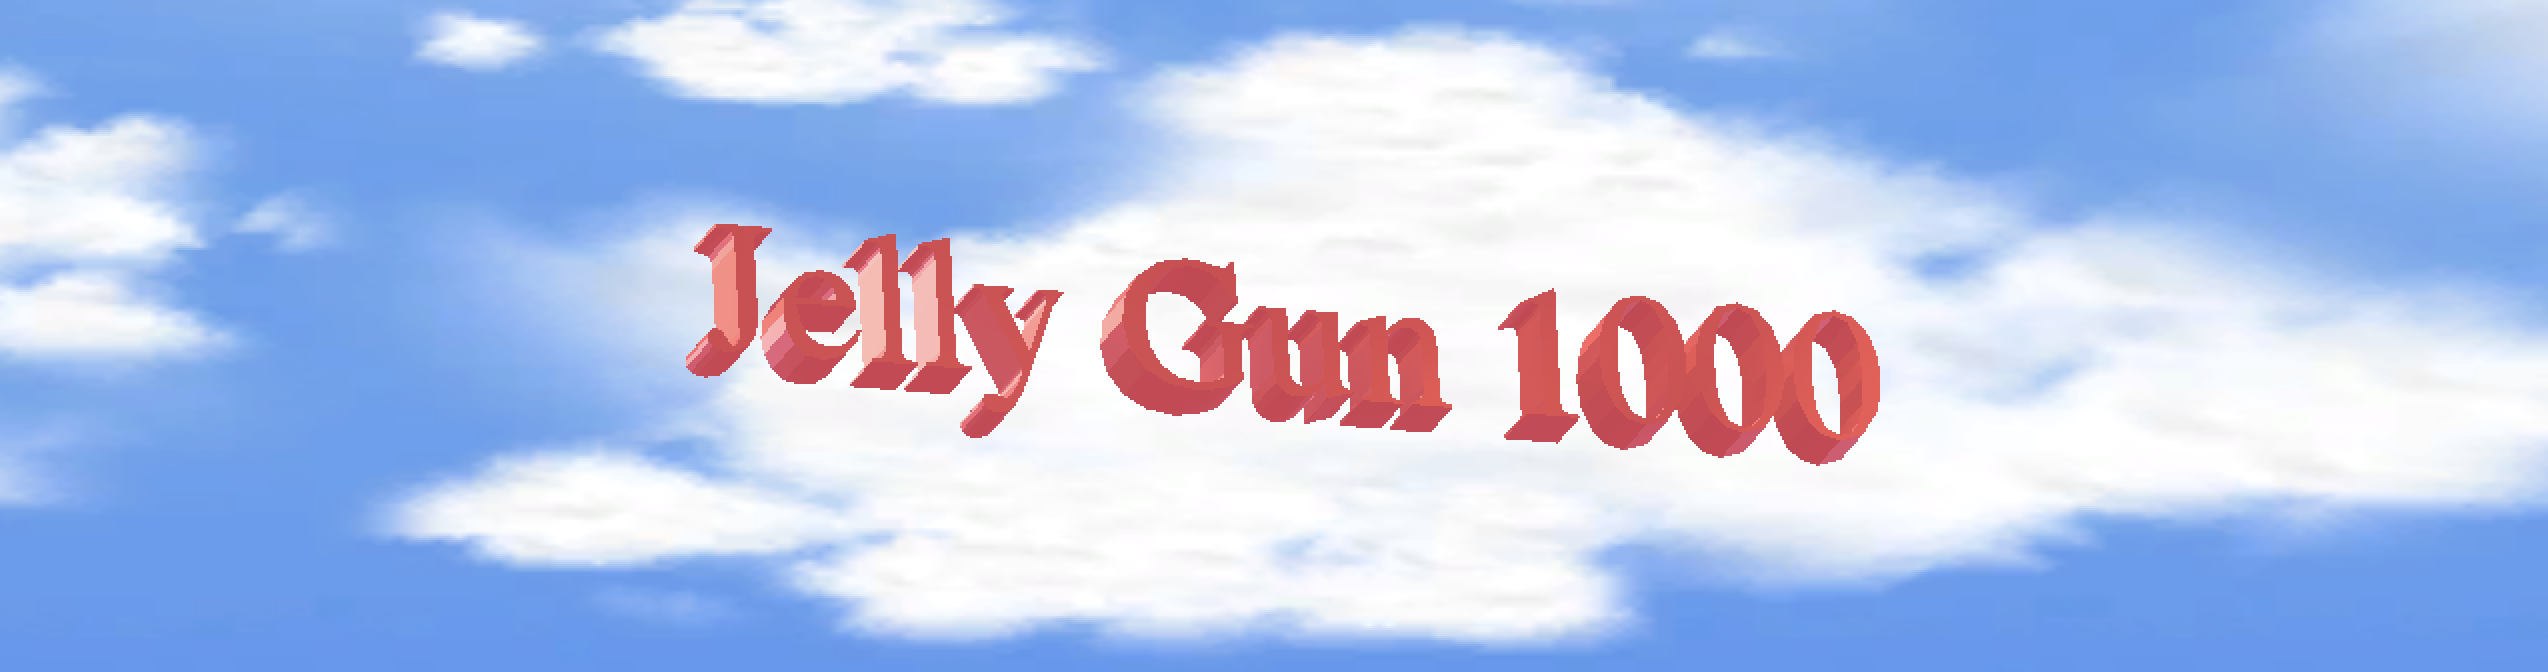 Jelly Gun 1000